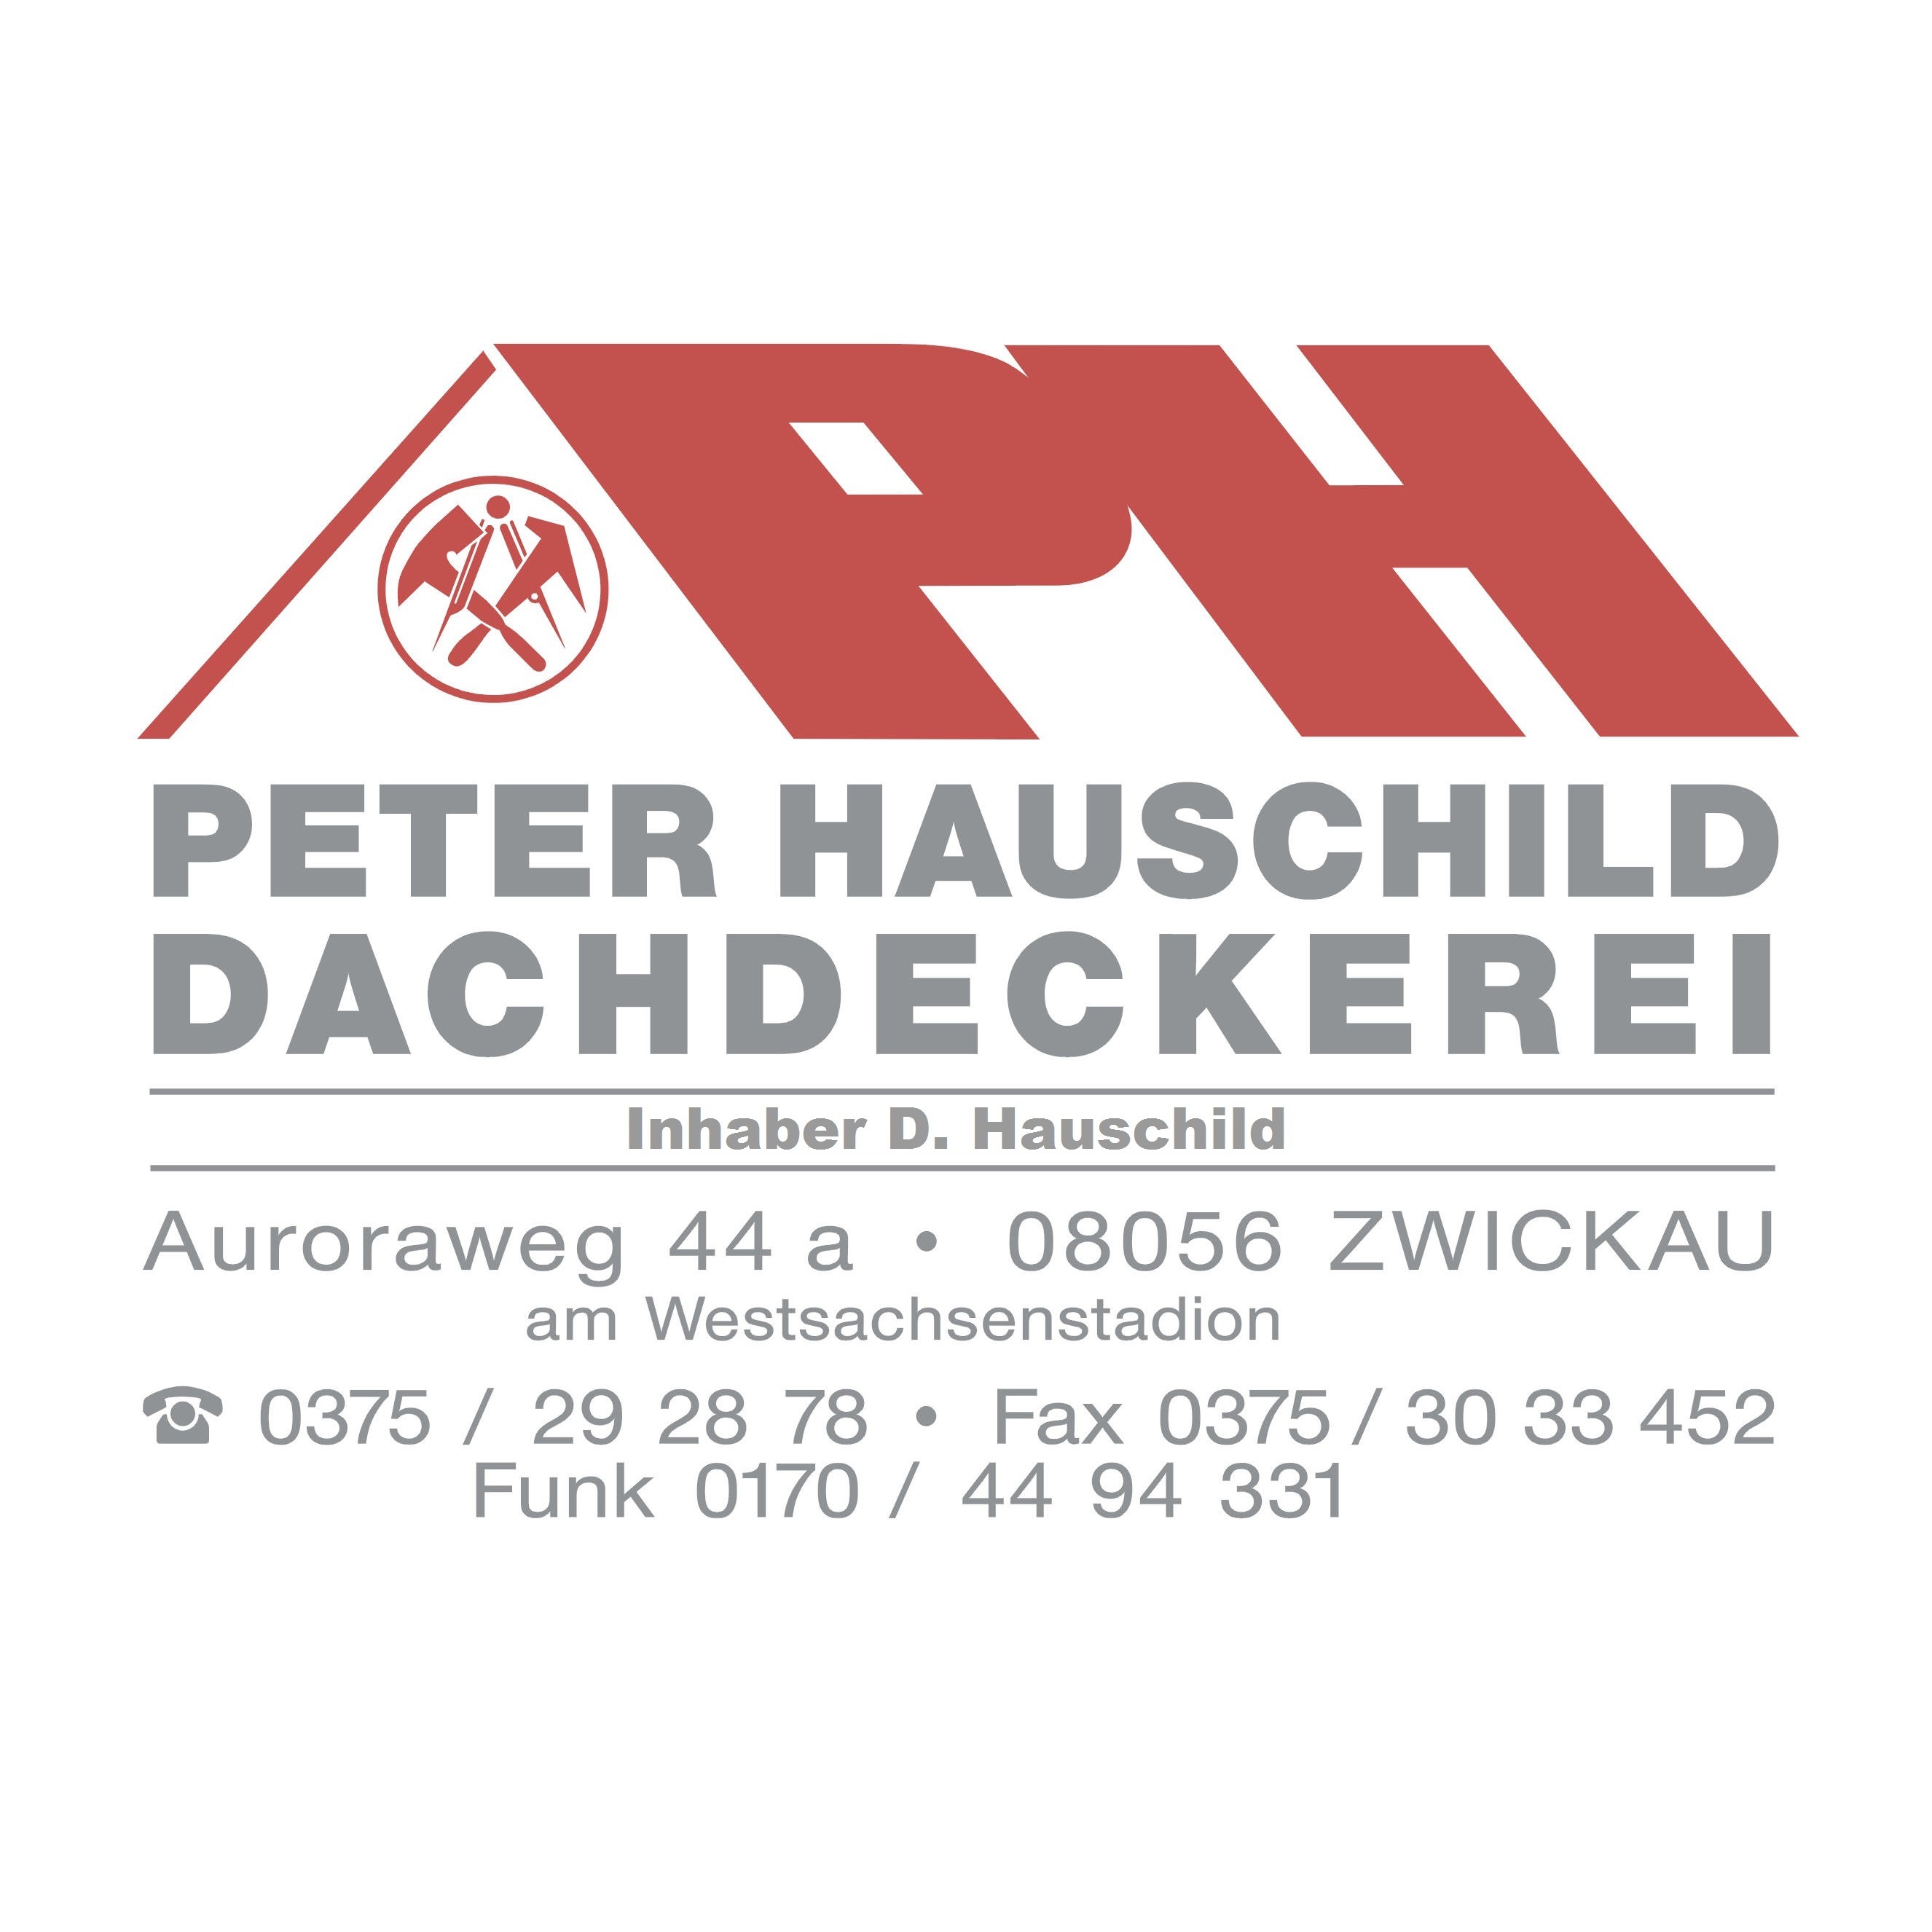 Dachdeckerei Hauschild Logo